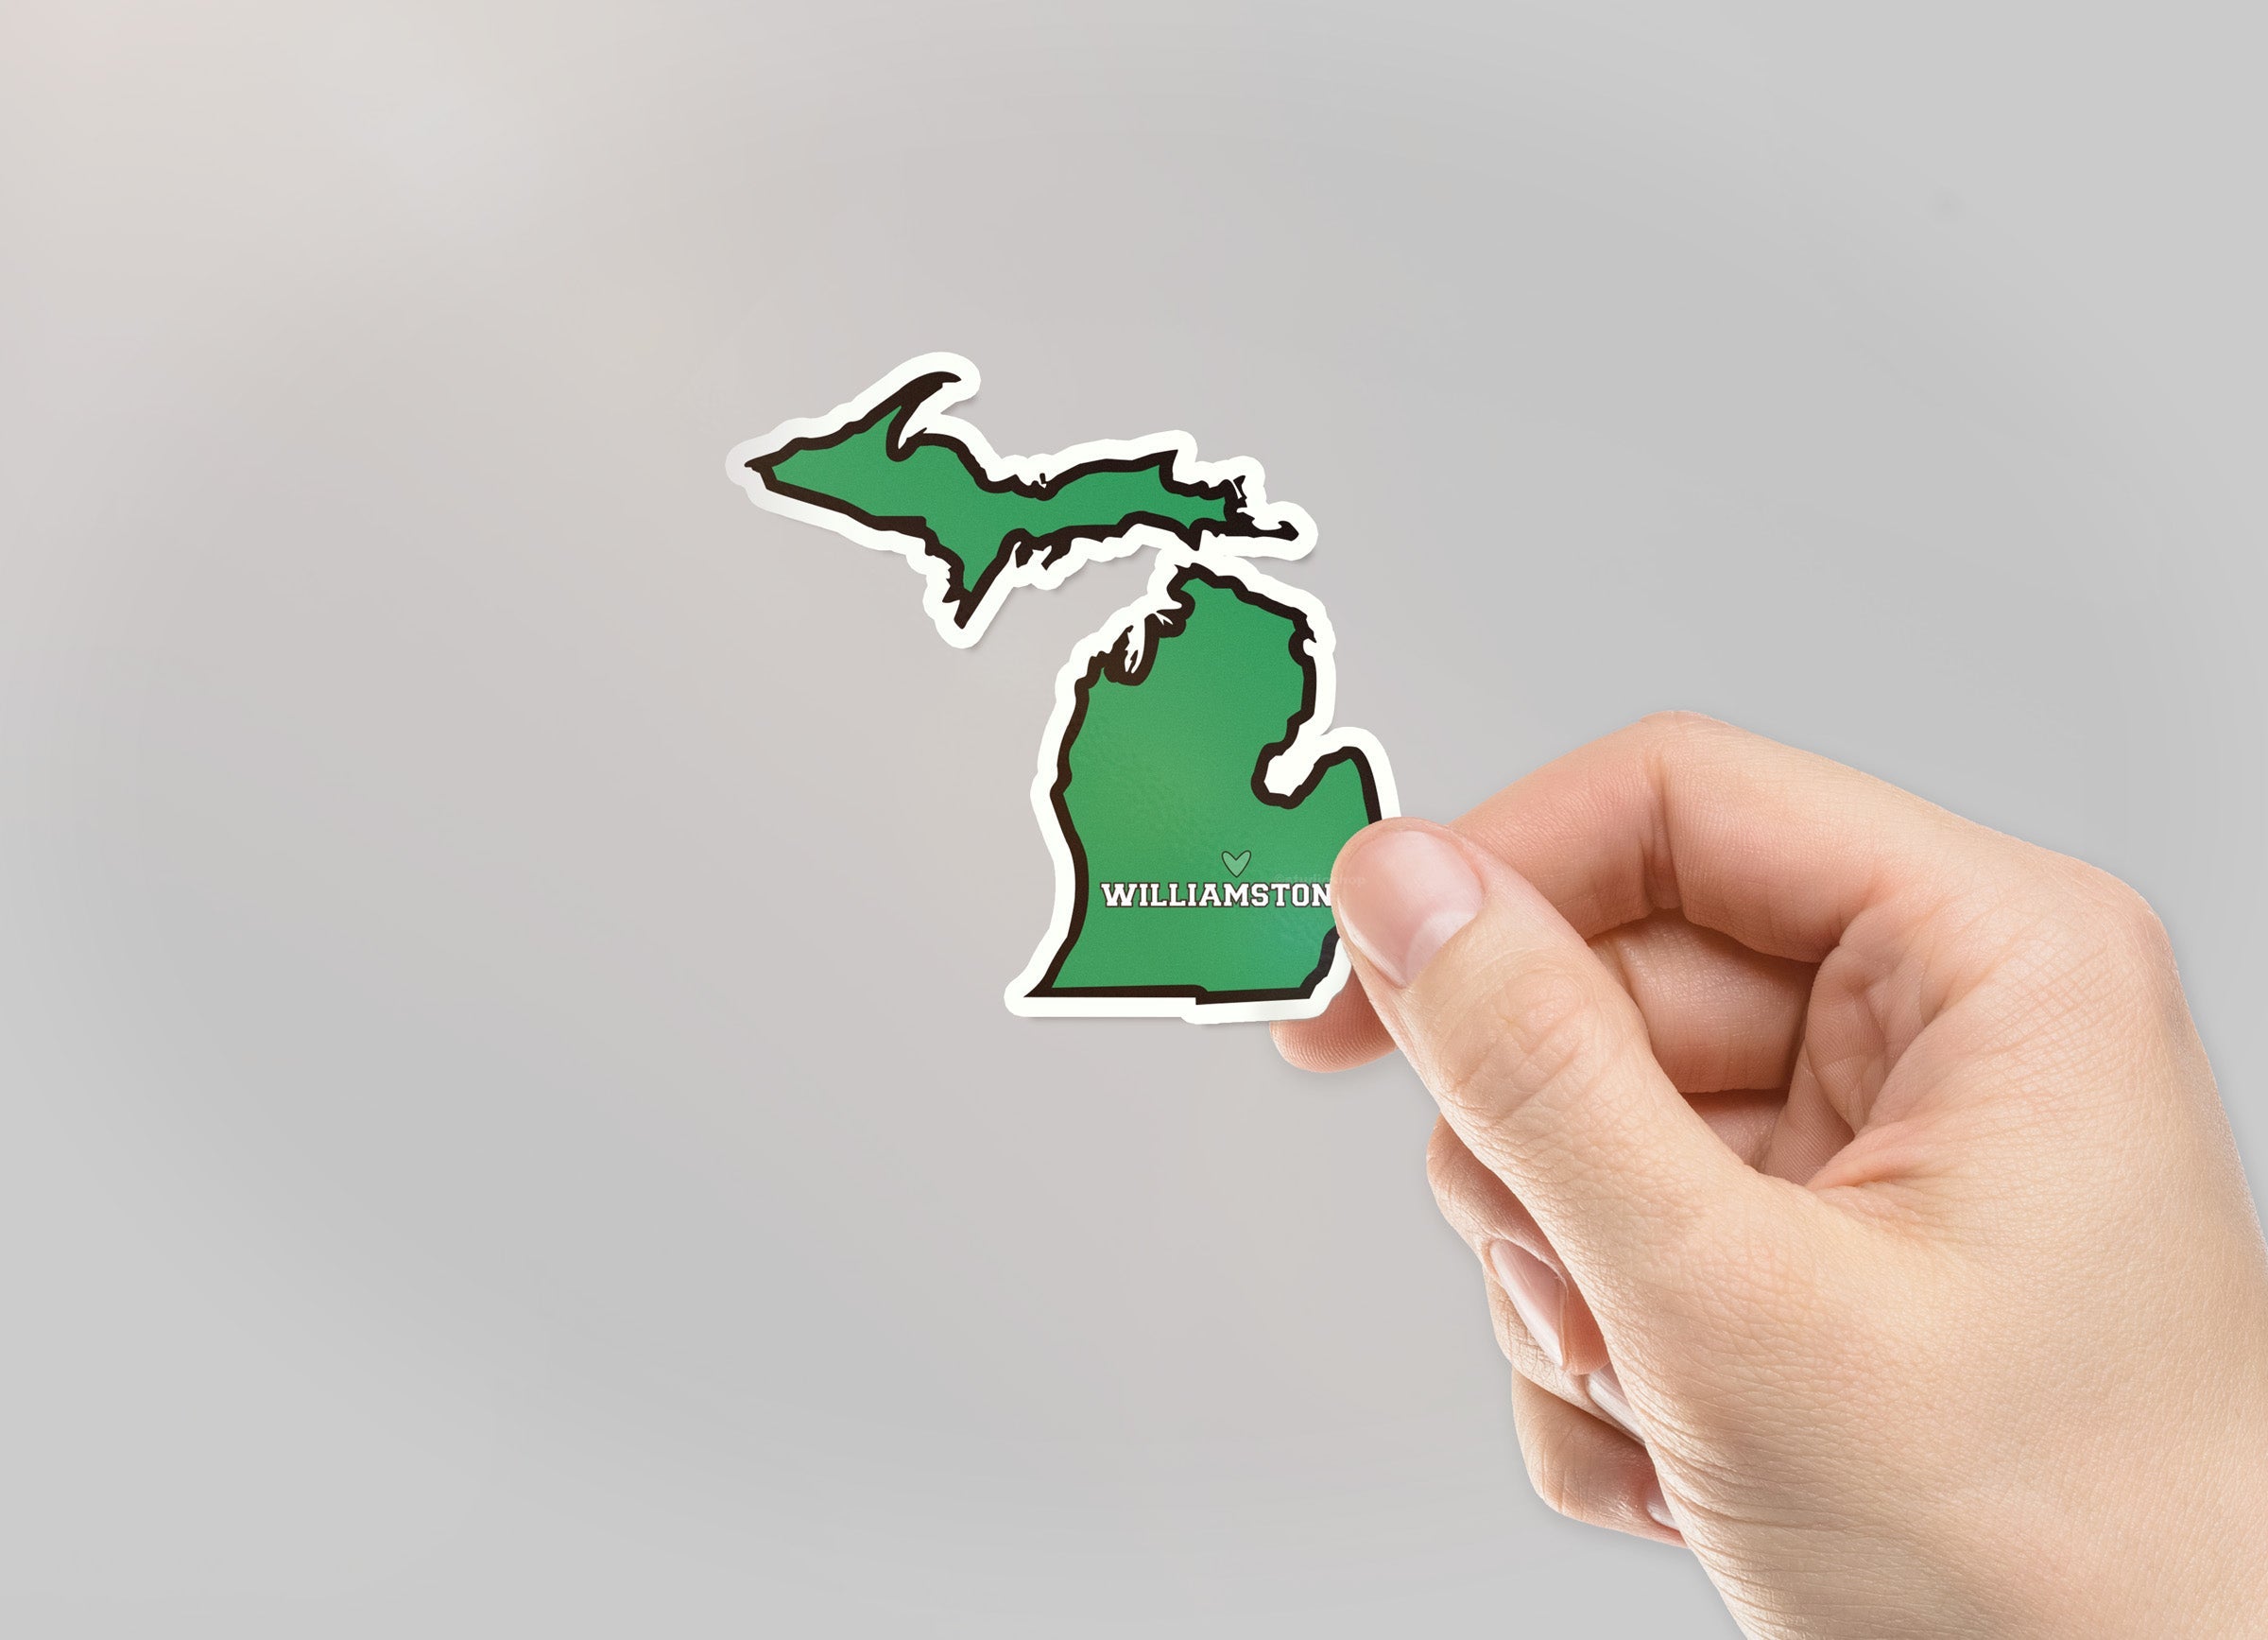 Williamston Michigan Waterproof Sticker (3" X 3")